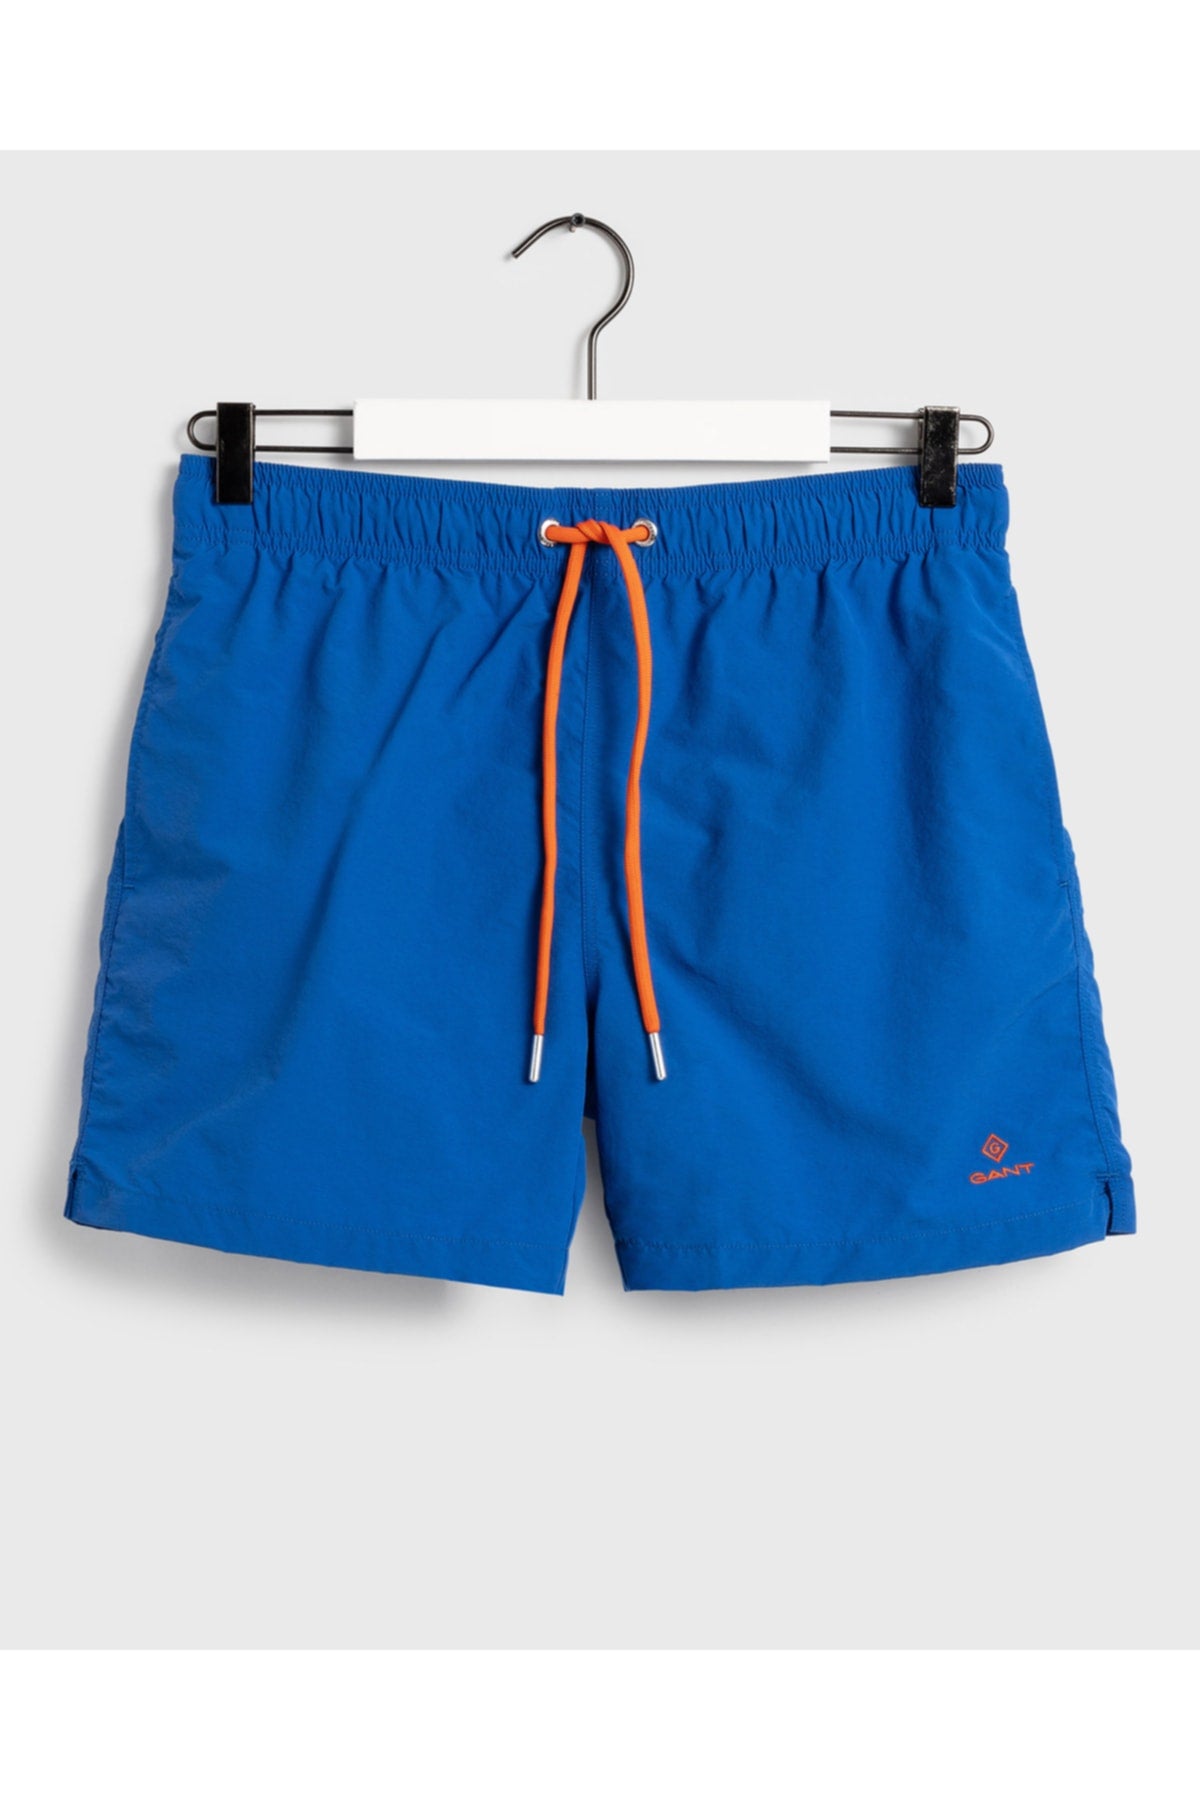 Men's Navy Blue Swimwear Shorts